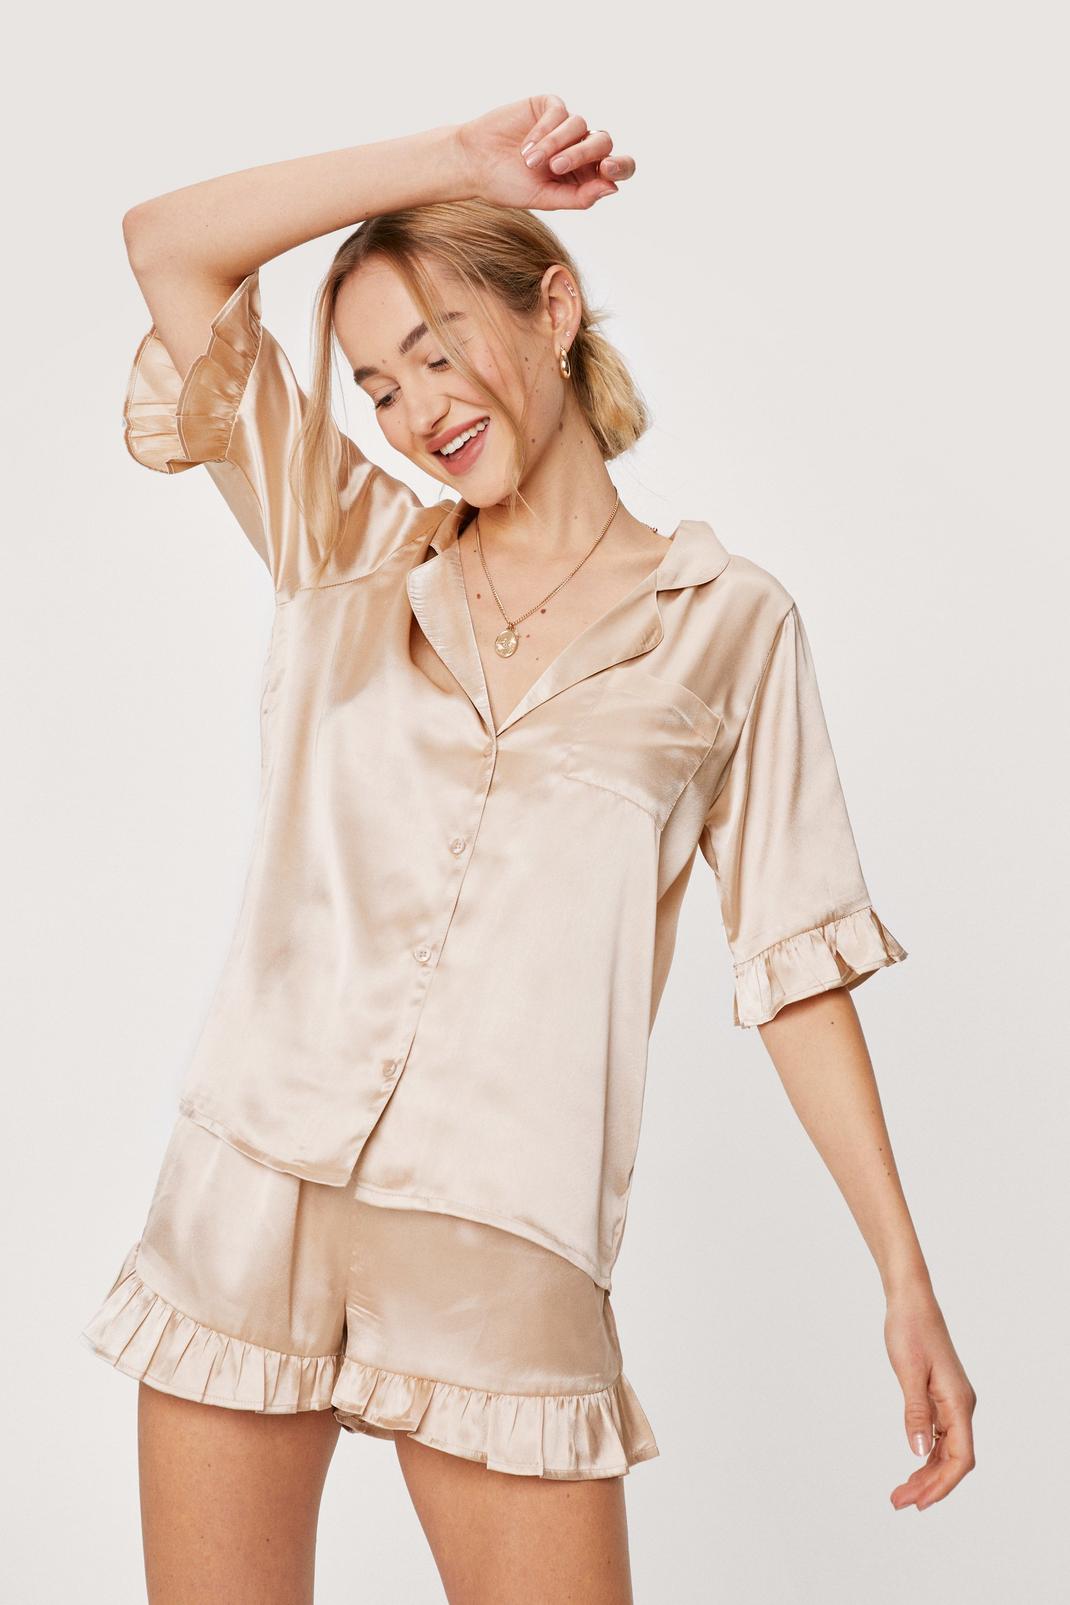 Women's Silk Satin Pajamas Set Ruffle Short Sleeve Sleepwear